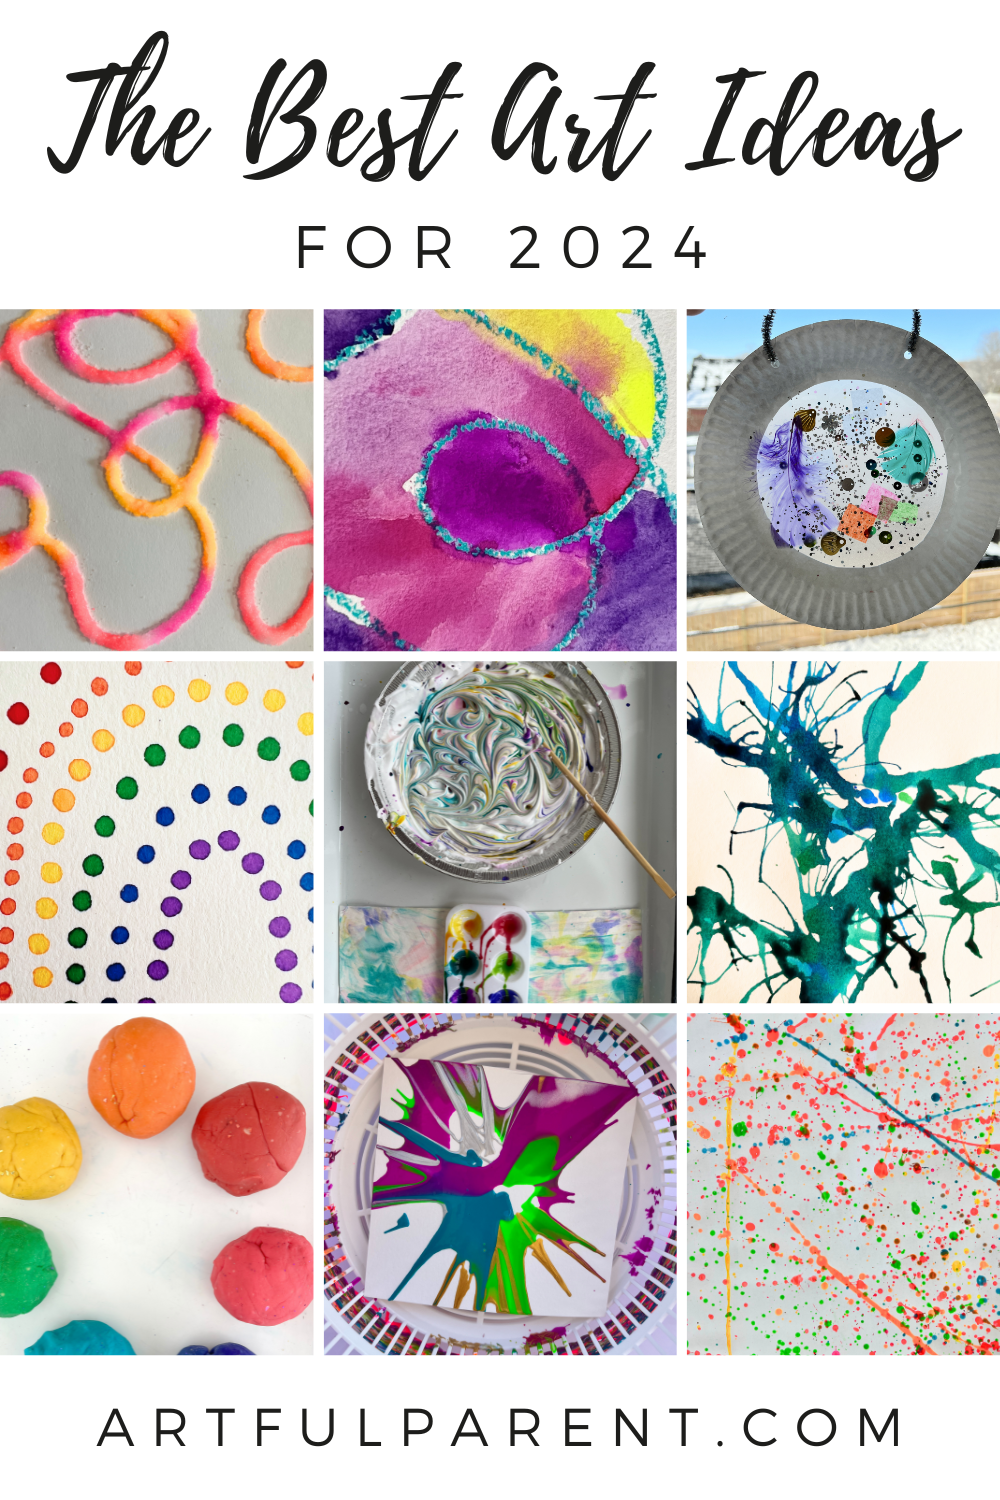 The Best Art Ideas for Kids in 2024